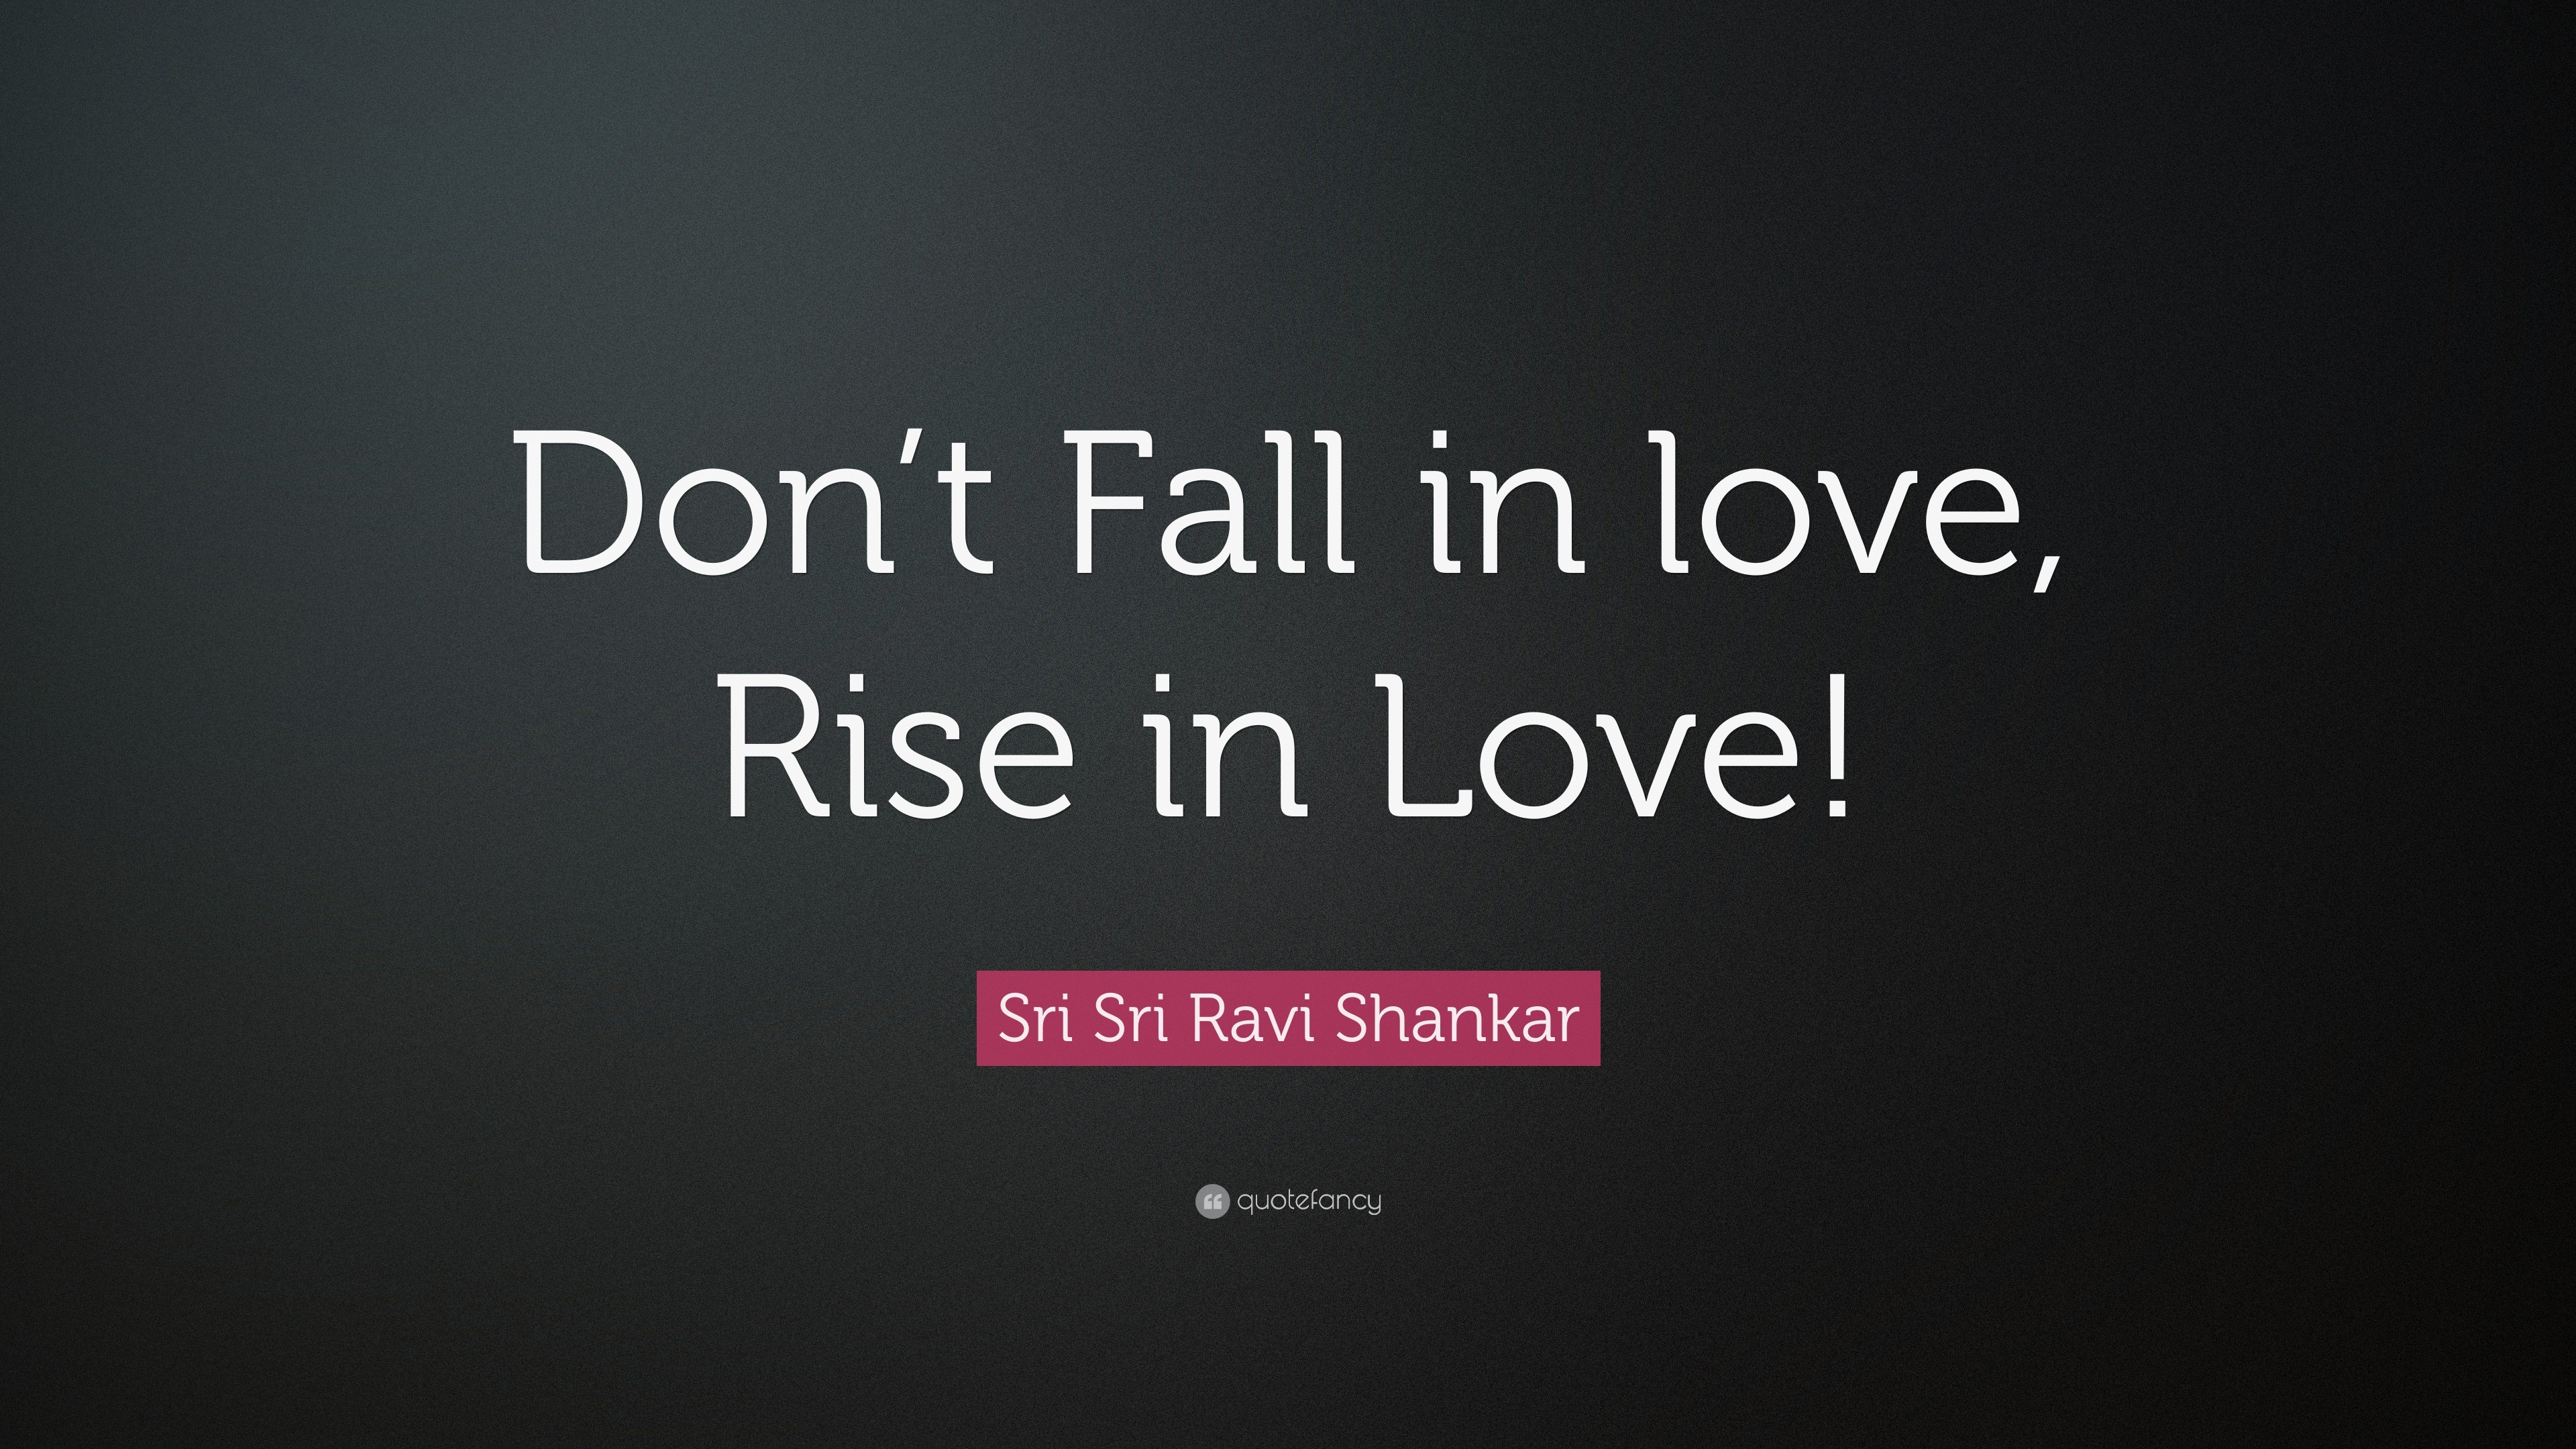 Sri Sri Ravi Shankar Quote “Don t Fall in love Rise in